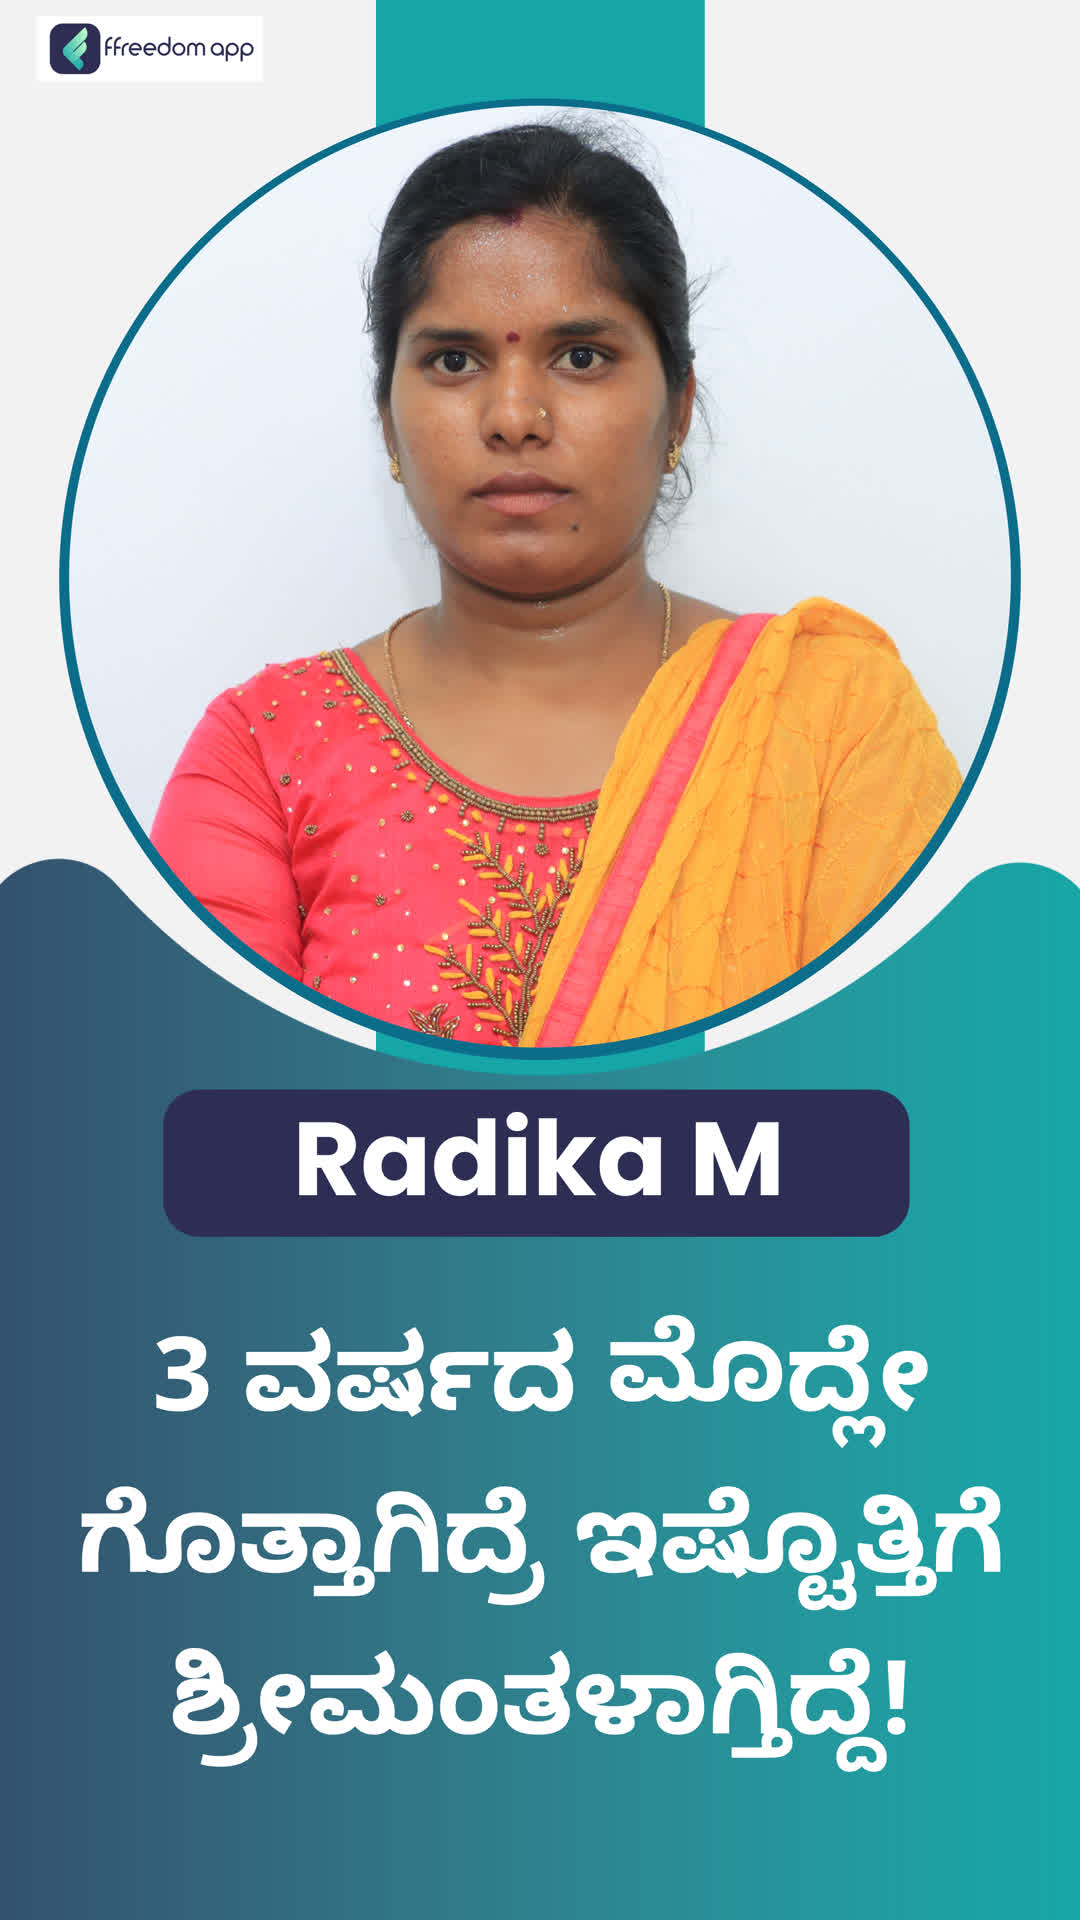 Radika M's Honest Review of ffreedom app - Bengaluru Rural ,Karnataka